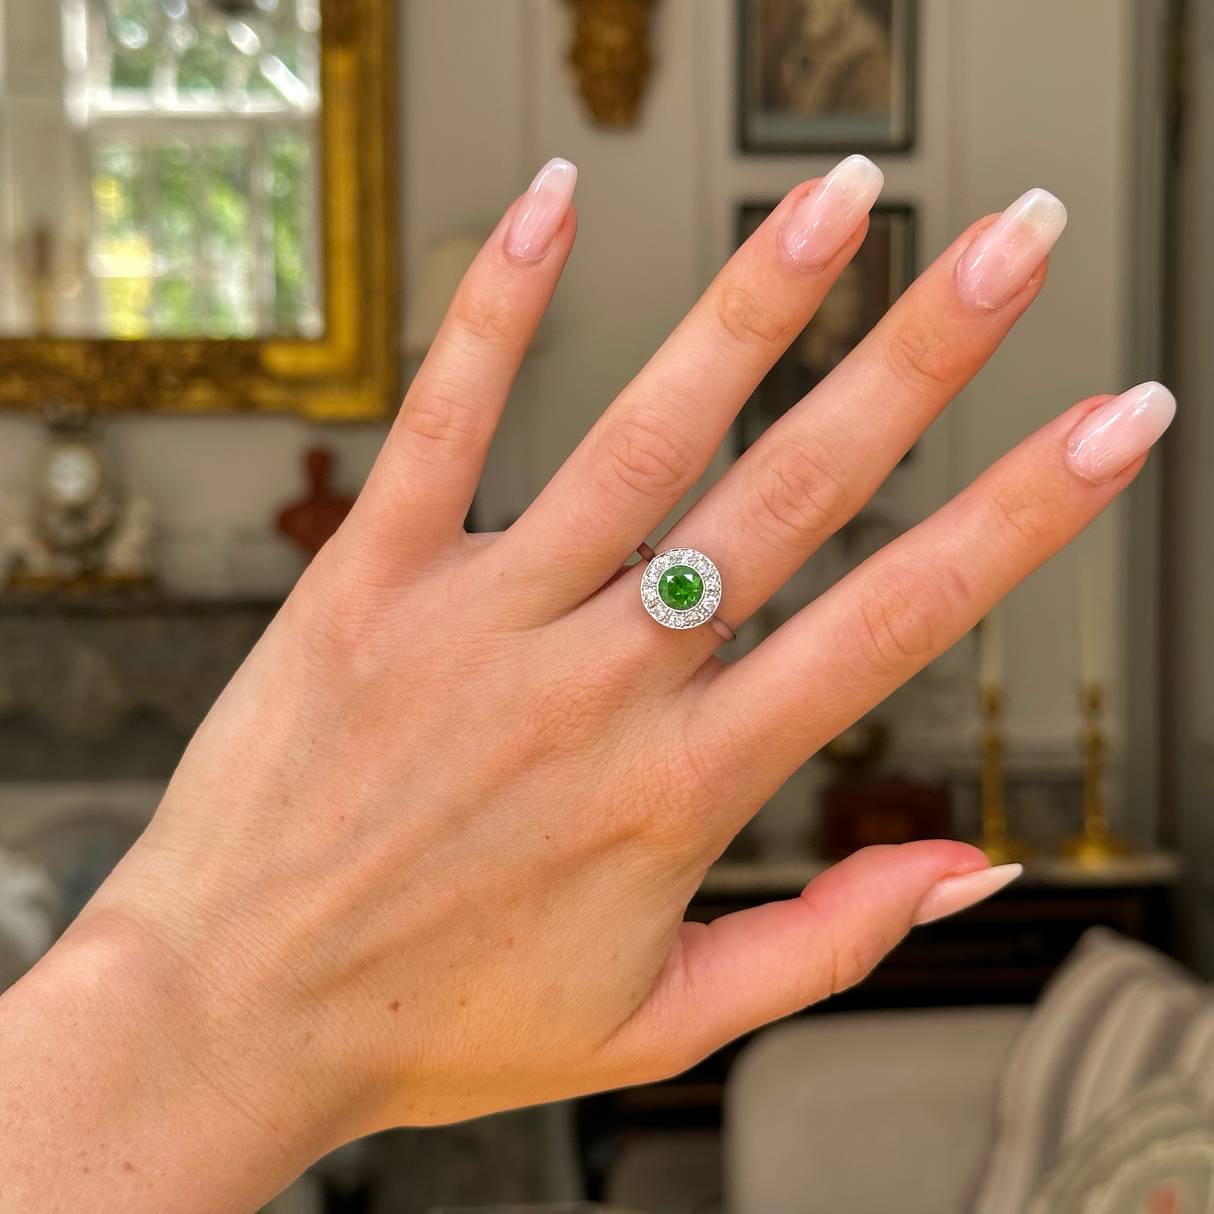 Vintage, 1.20ct demantoid green garnet & diamond cluster ring, 18ct white gold